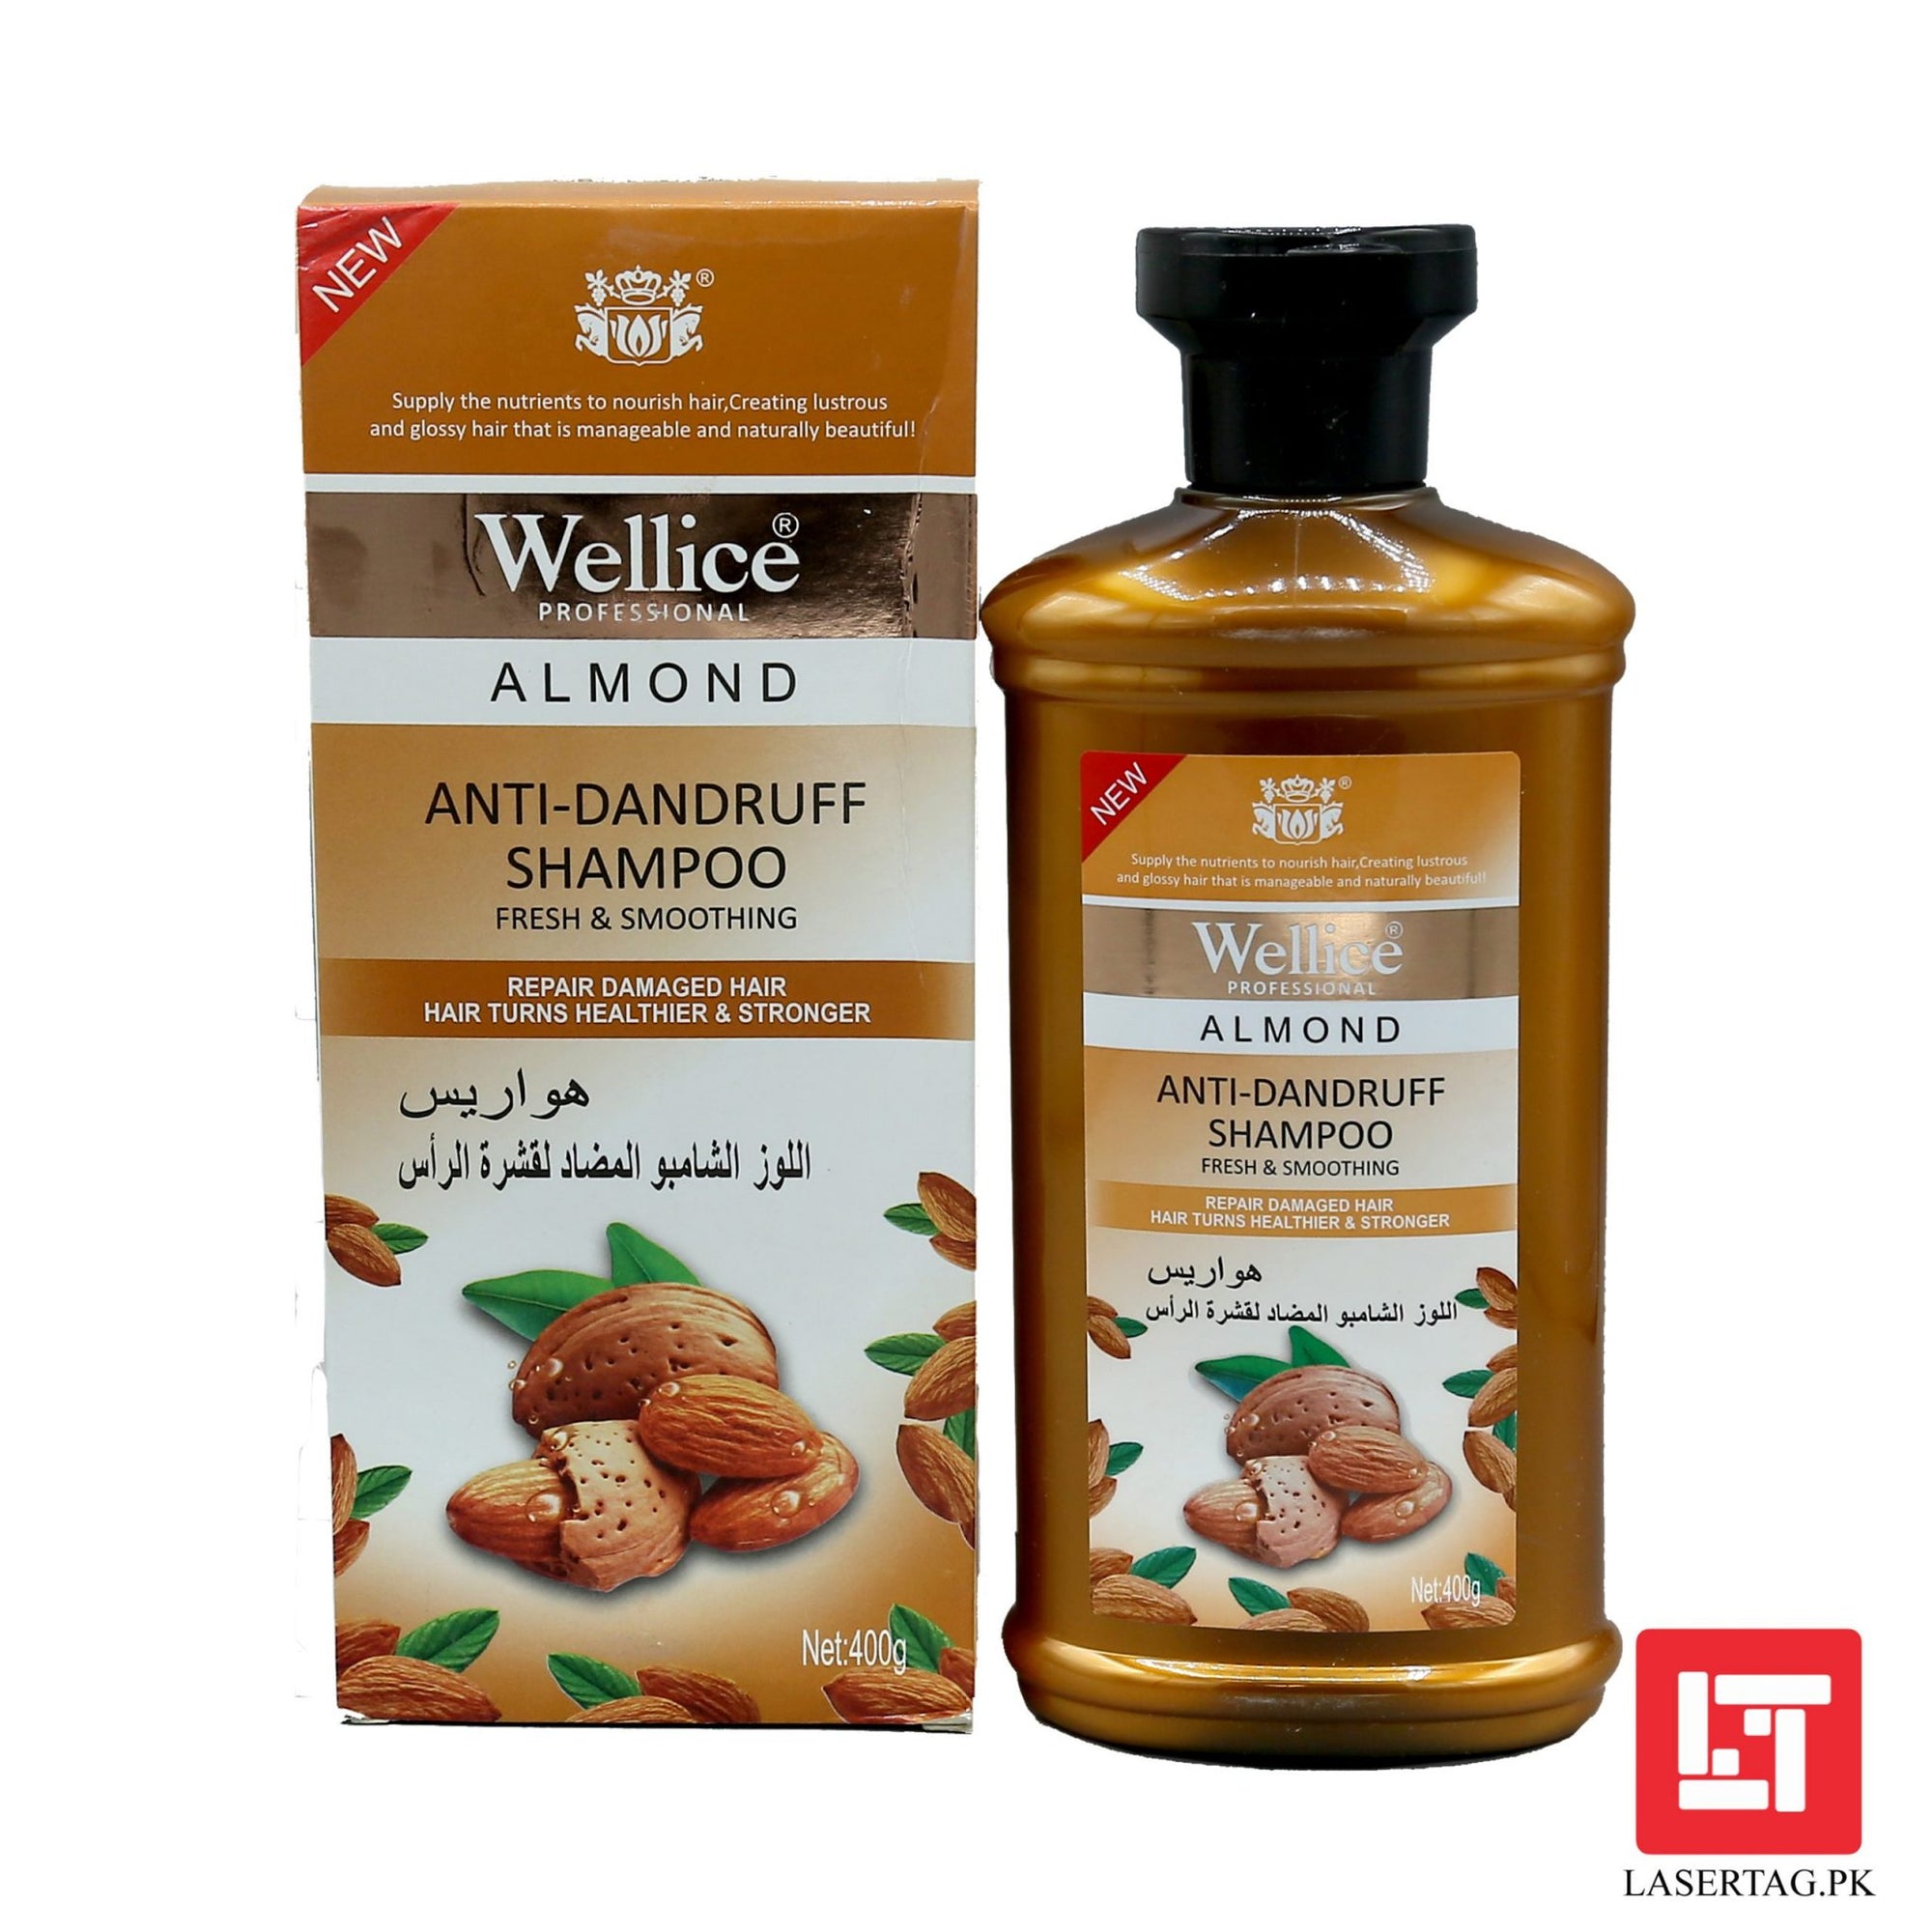 Wellice Almond AntiDandruf Shampoo Fresh & Smoothing Repair Damged Hair Turns Healthier & Stronger 400g freeshipping - lasertag.pk